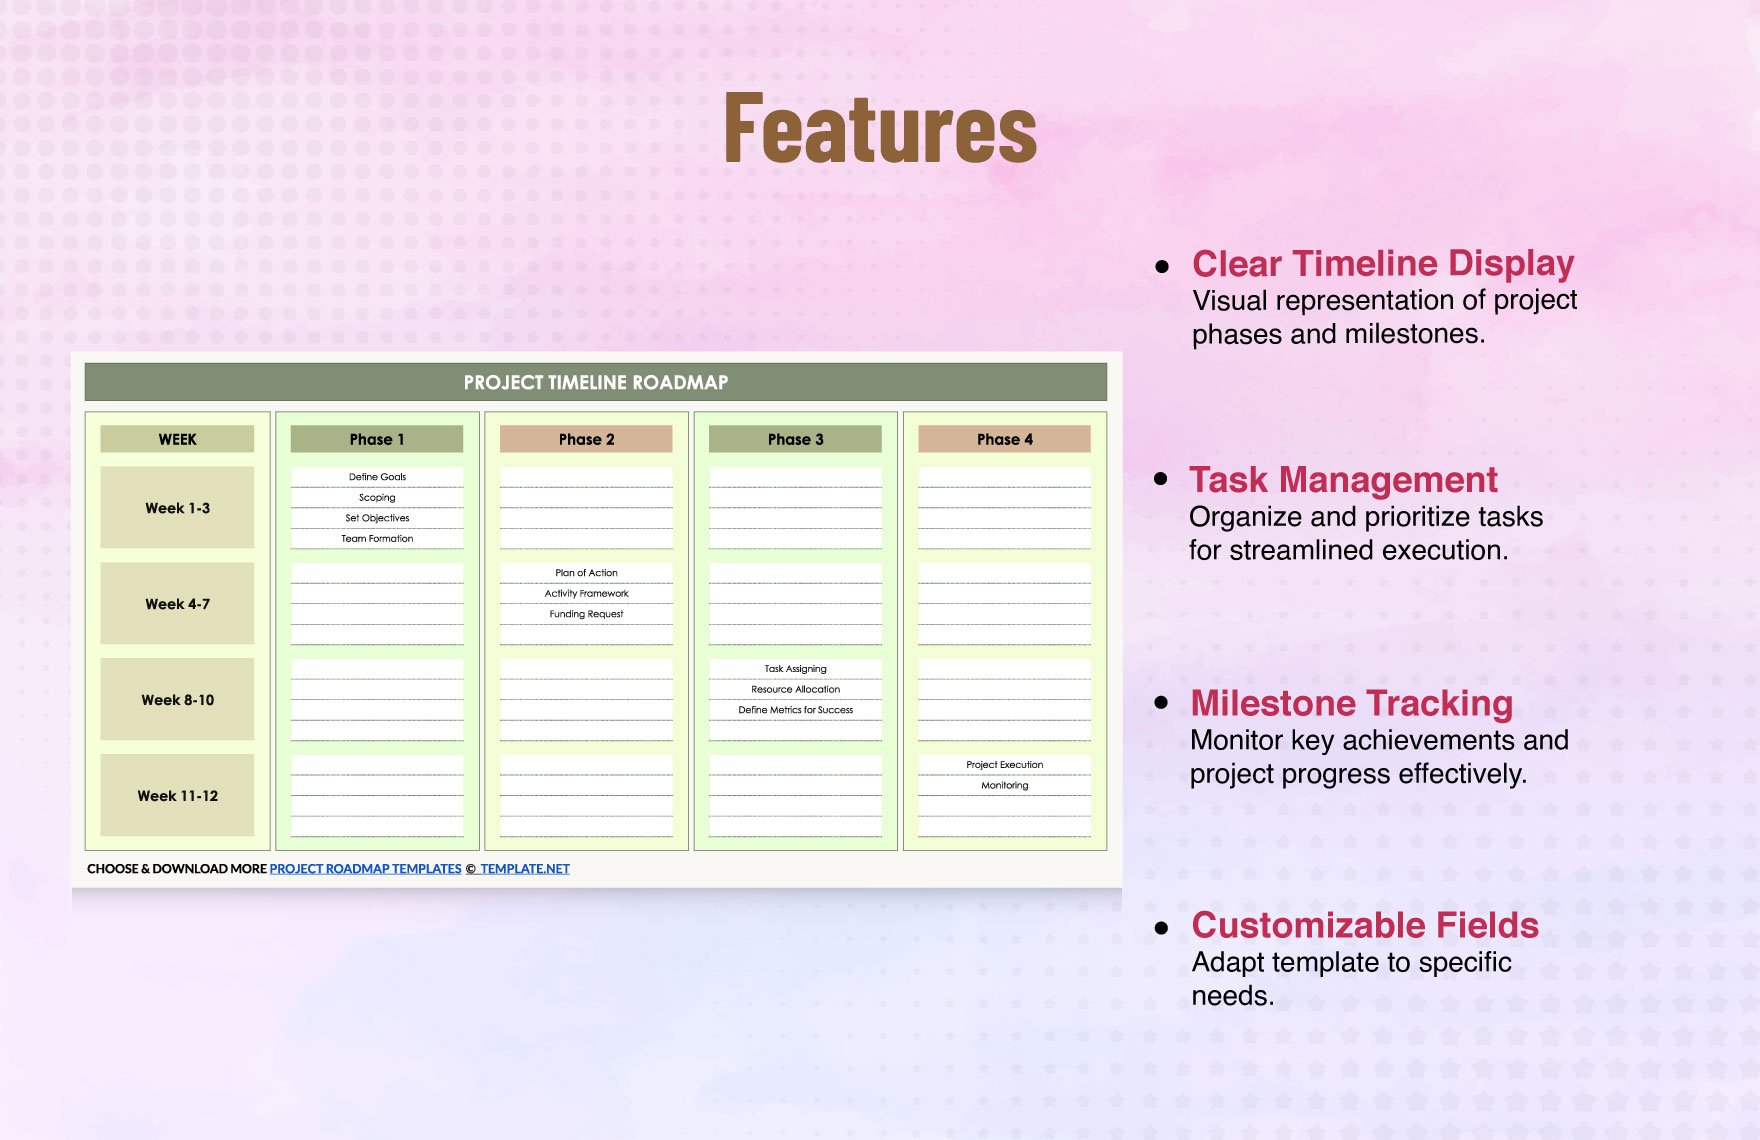 Simple Project Timeline Roadmap Template